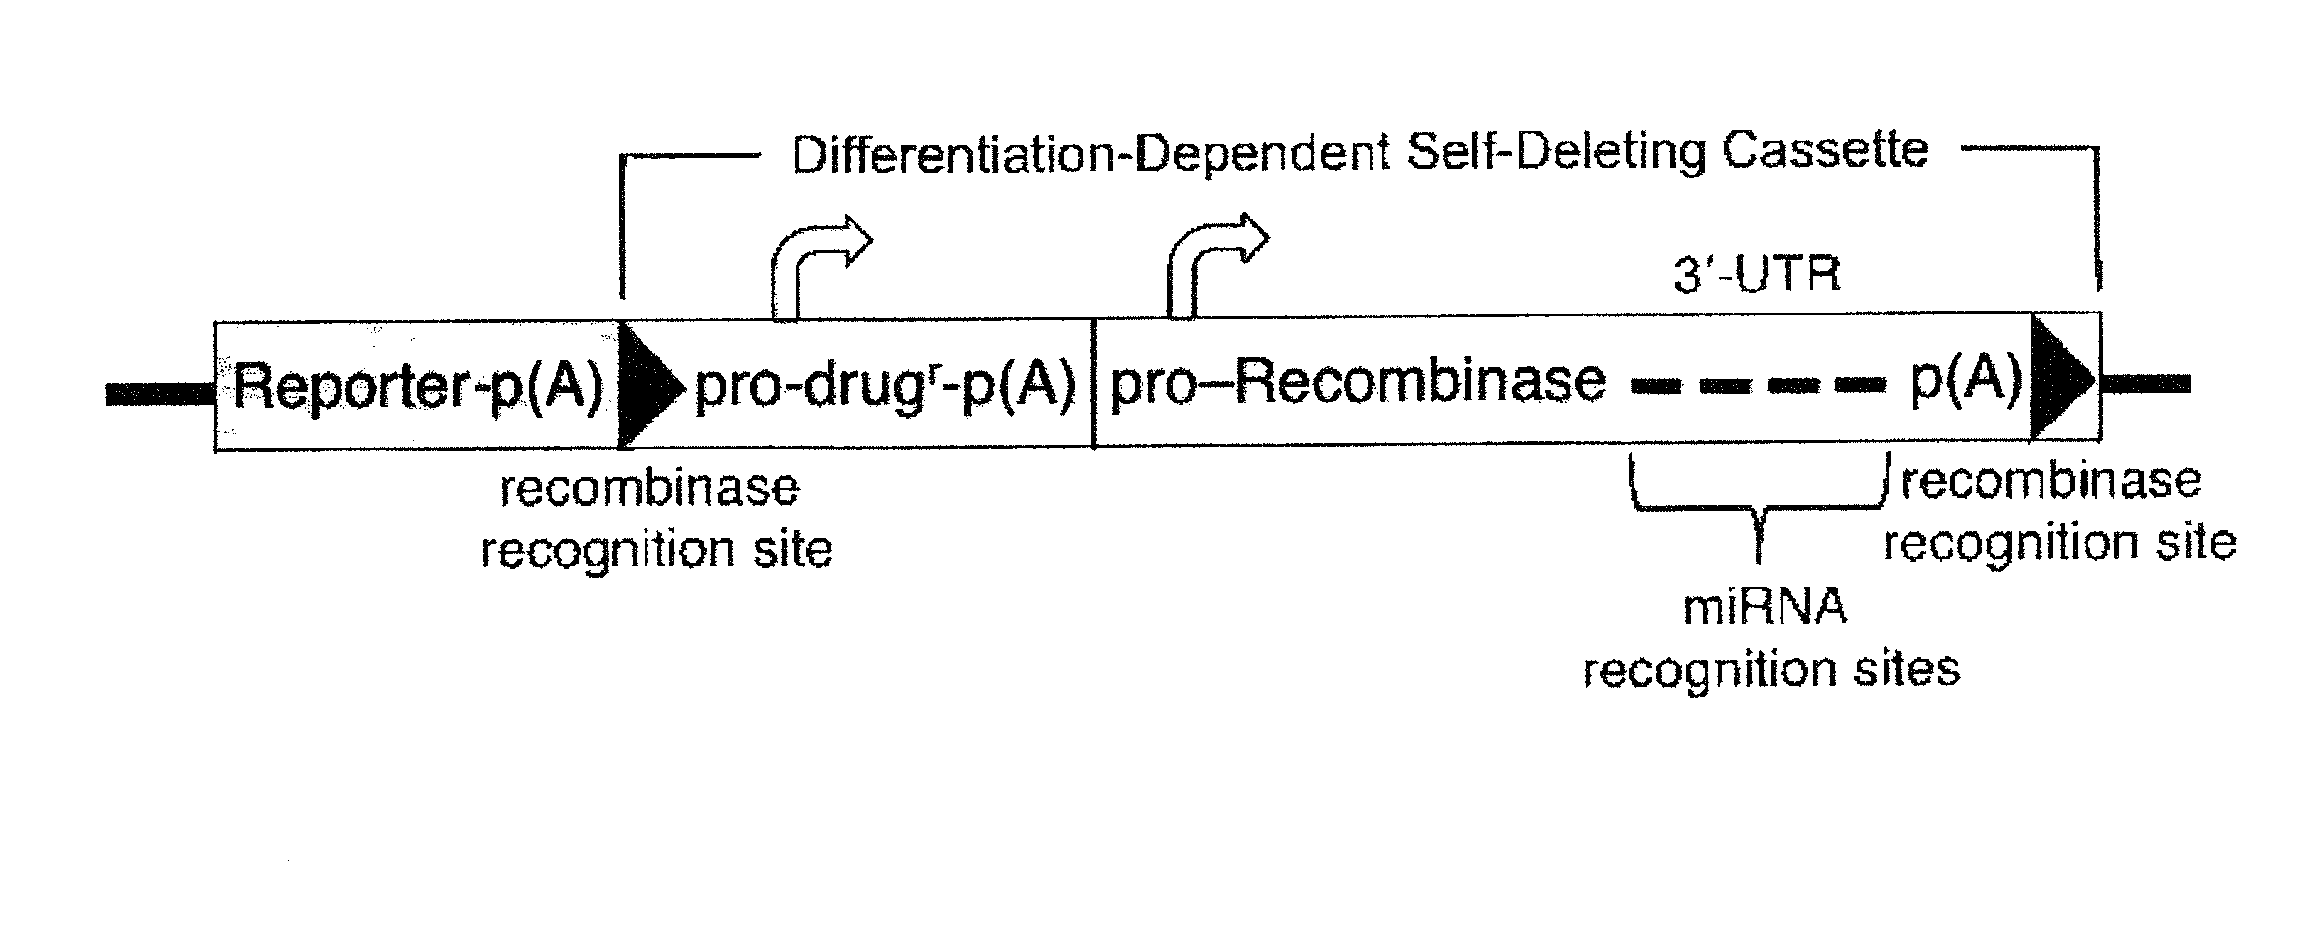 miRNA-Regulated Differentiation-Dependent Self-Deleting Cassette